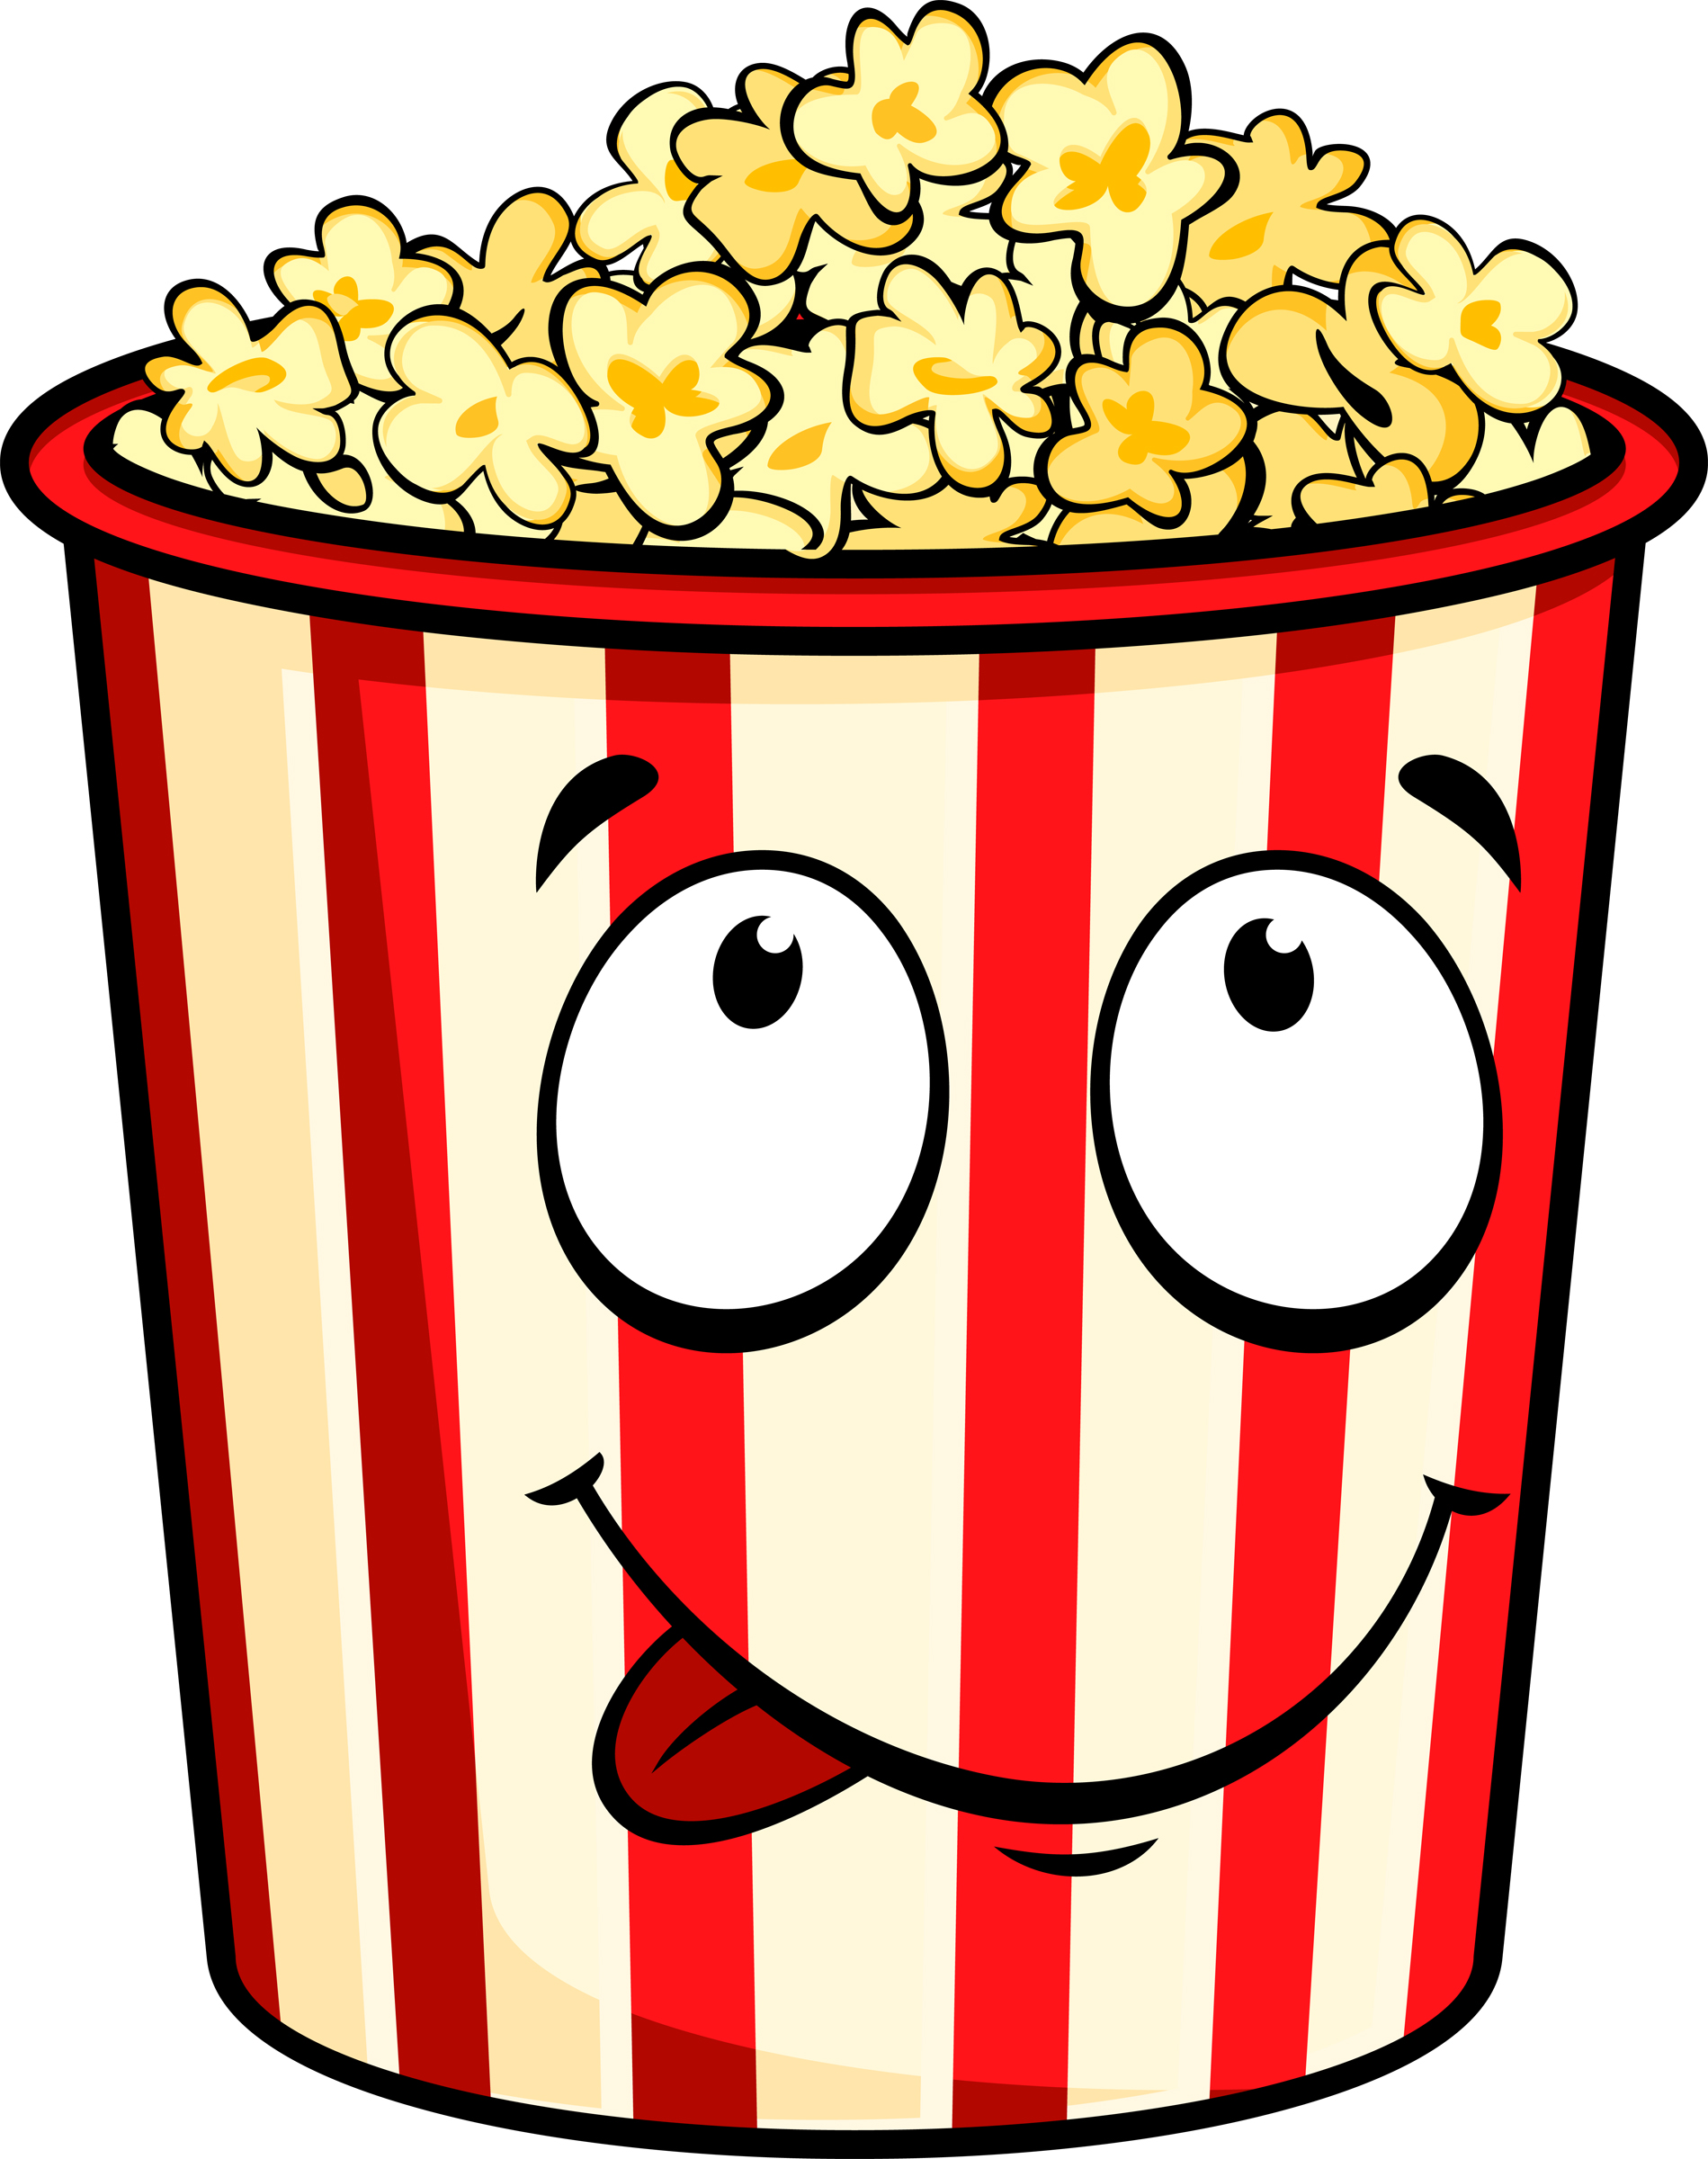 Picture #2986024 - movie clipart bowl popcorn. 